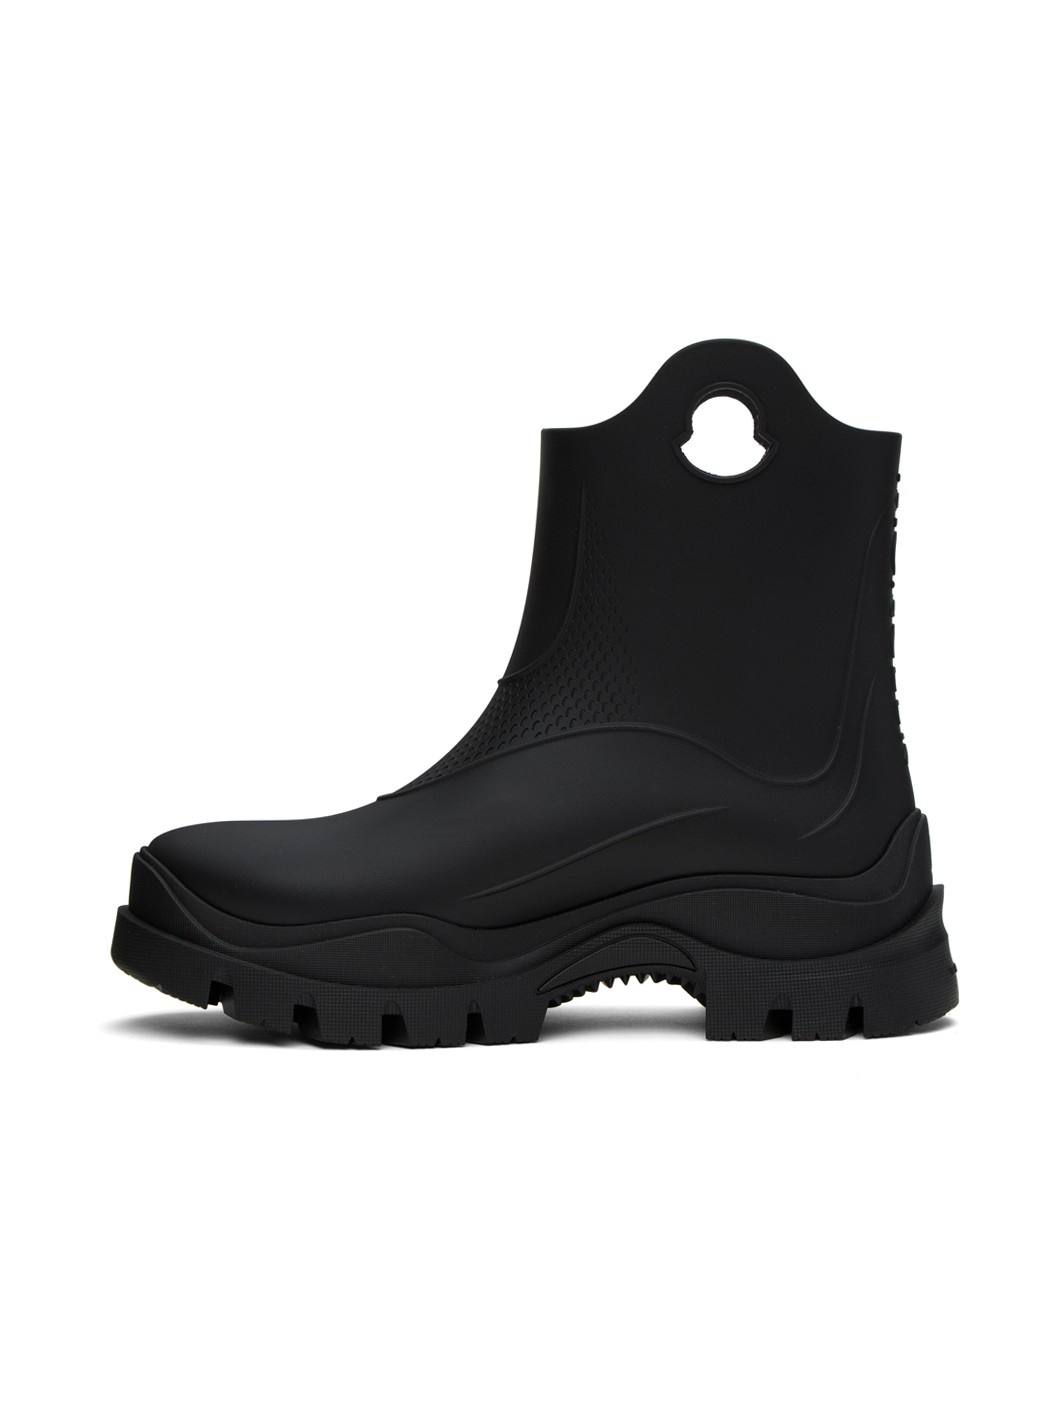 Black Misty Rain Boots - 3